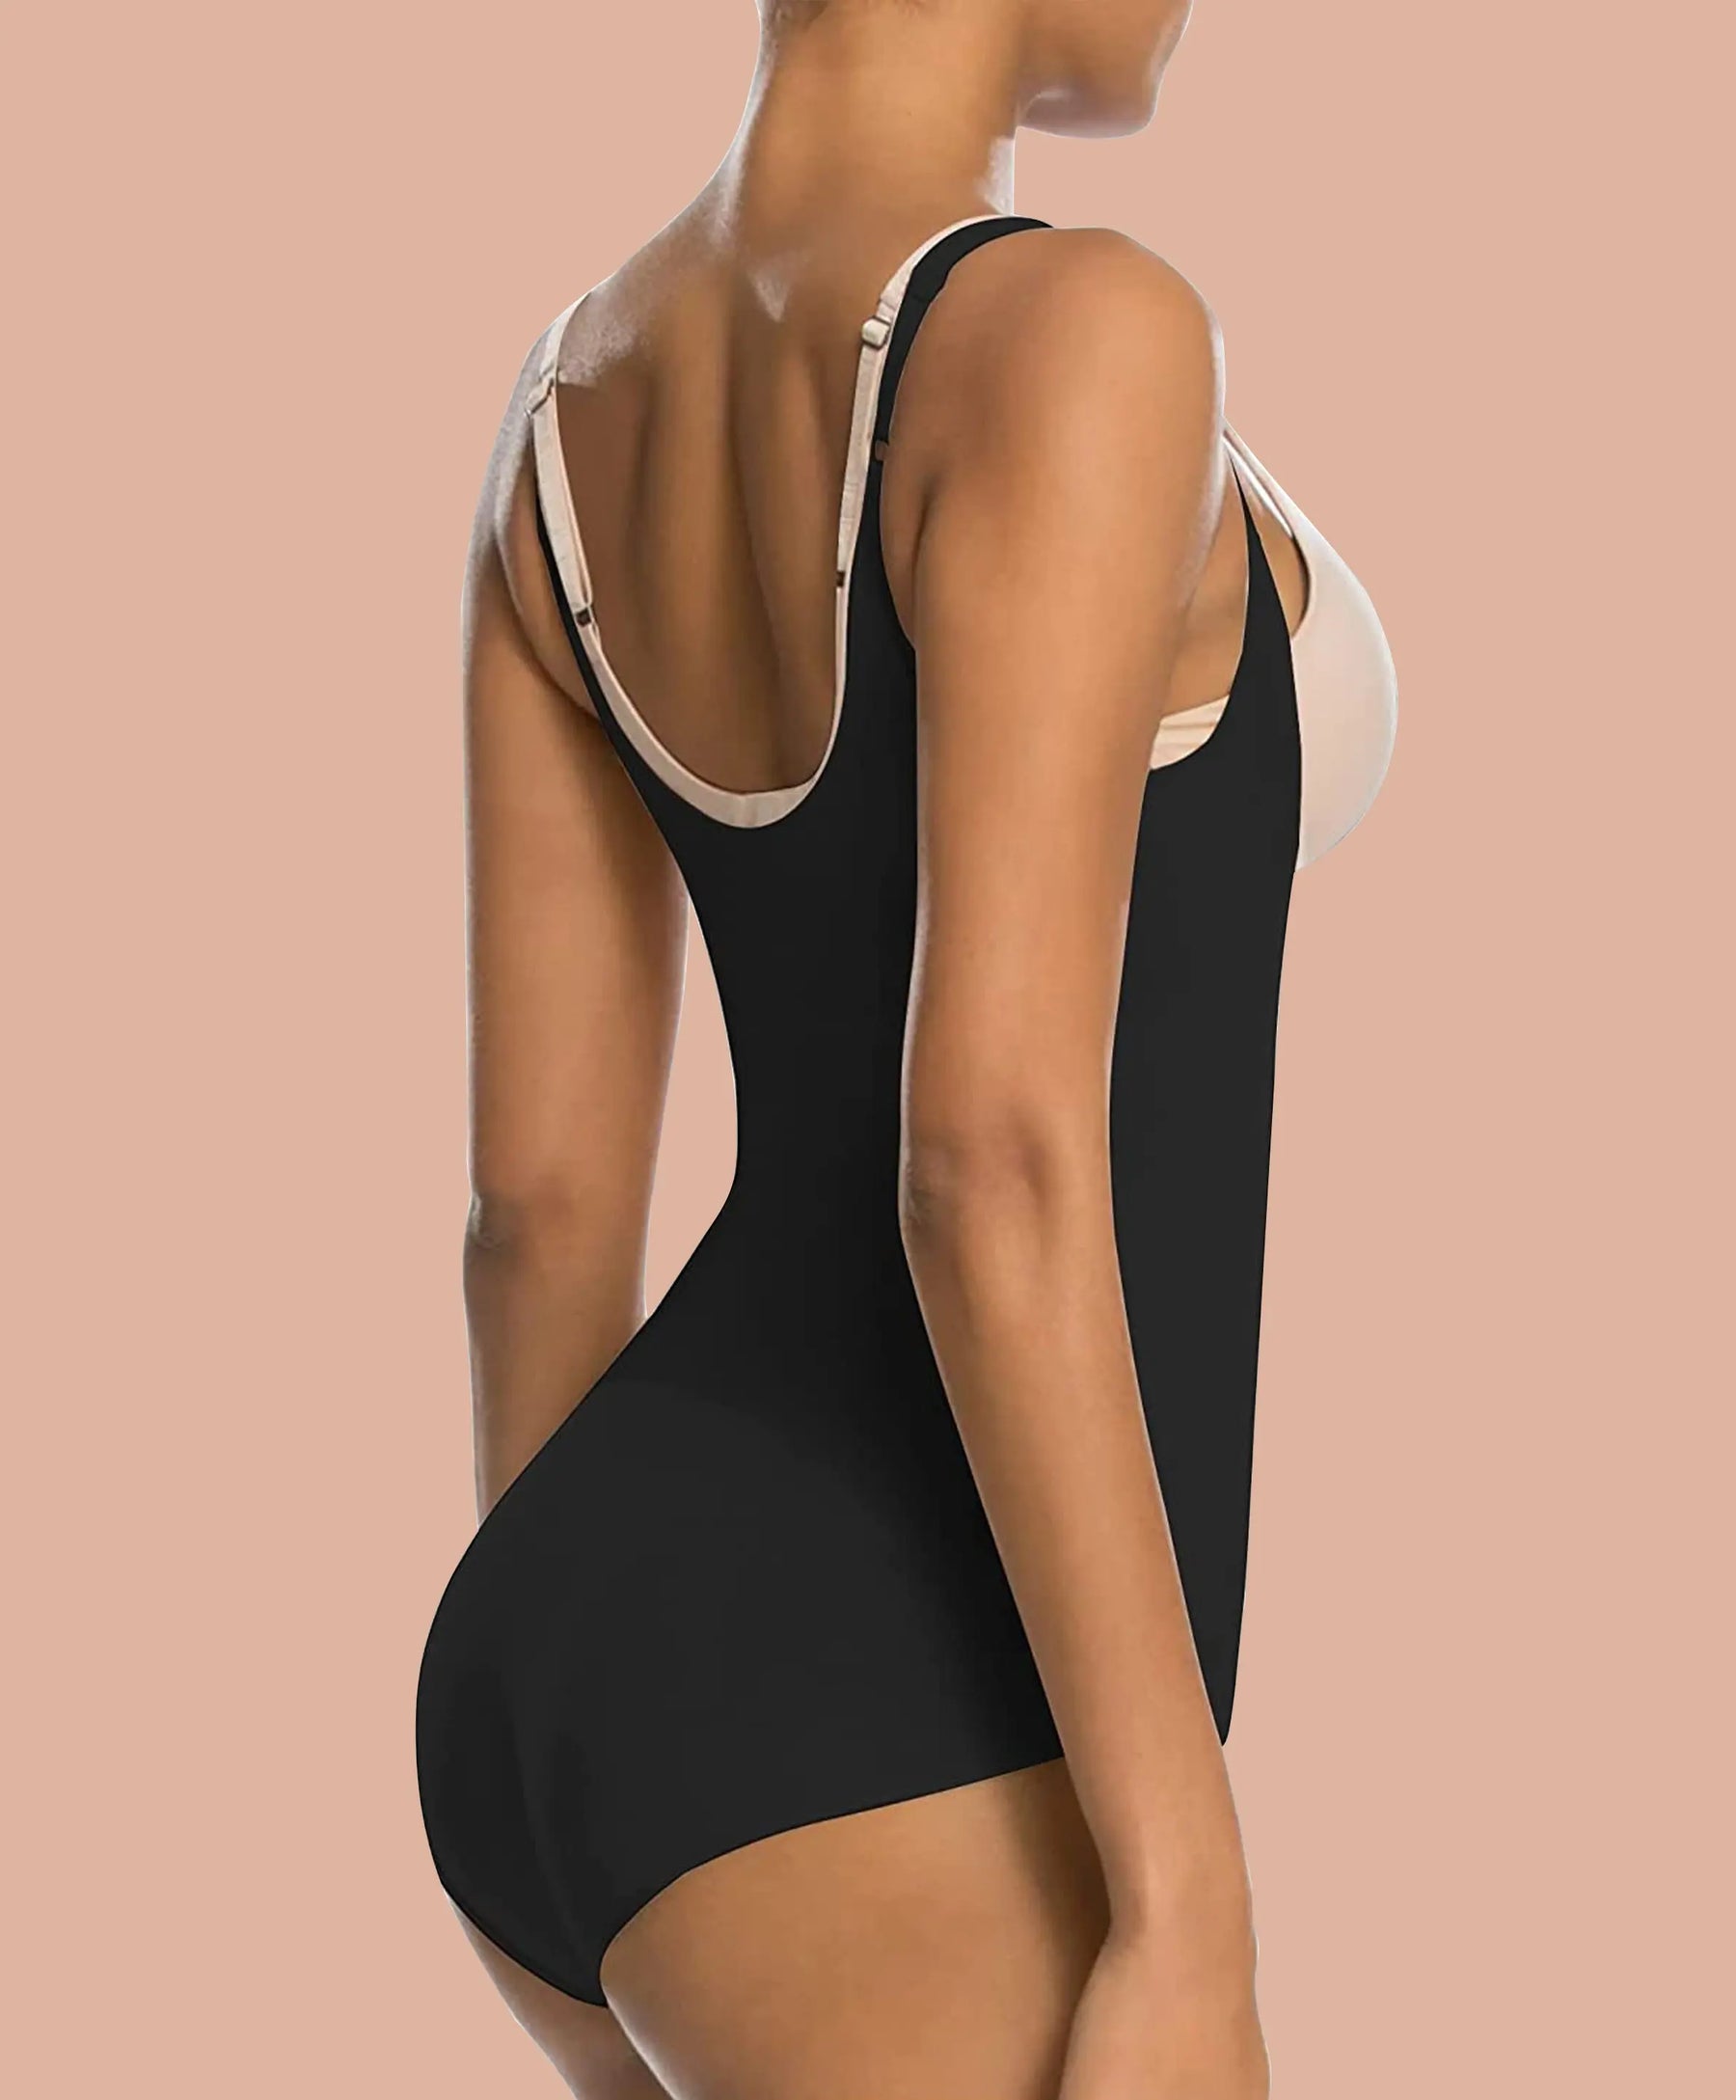 MANIFIQUE Thong Bodysuit for Women Tummy Control Shapewear Seamless  Sculpting Open Bust Body Shaper 